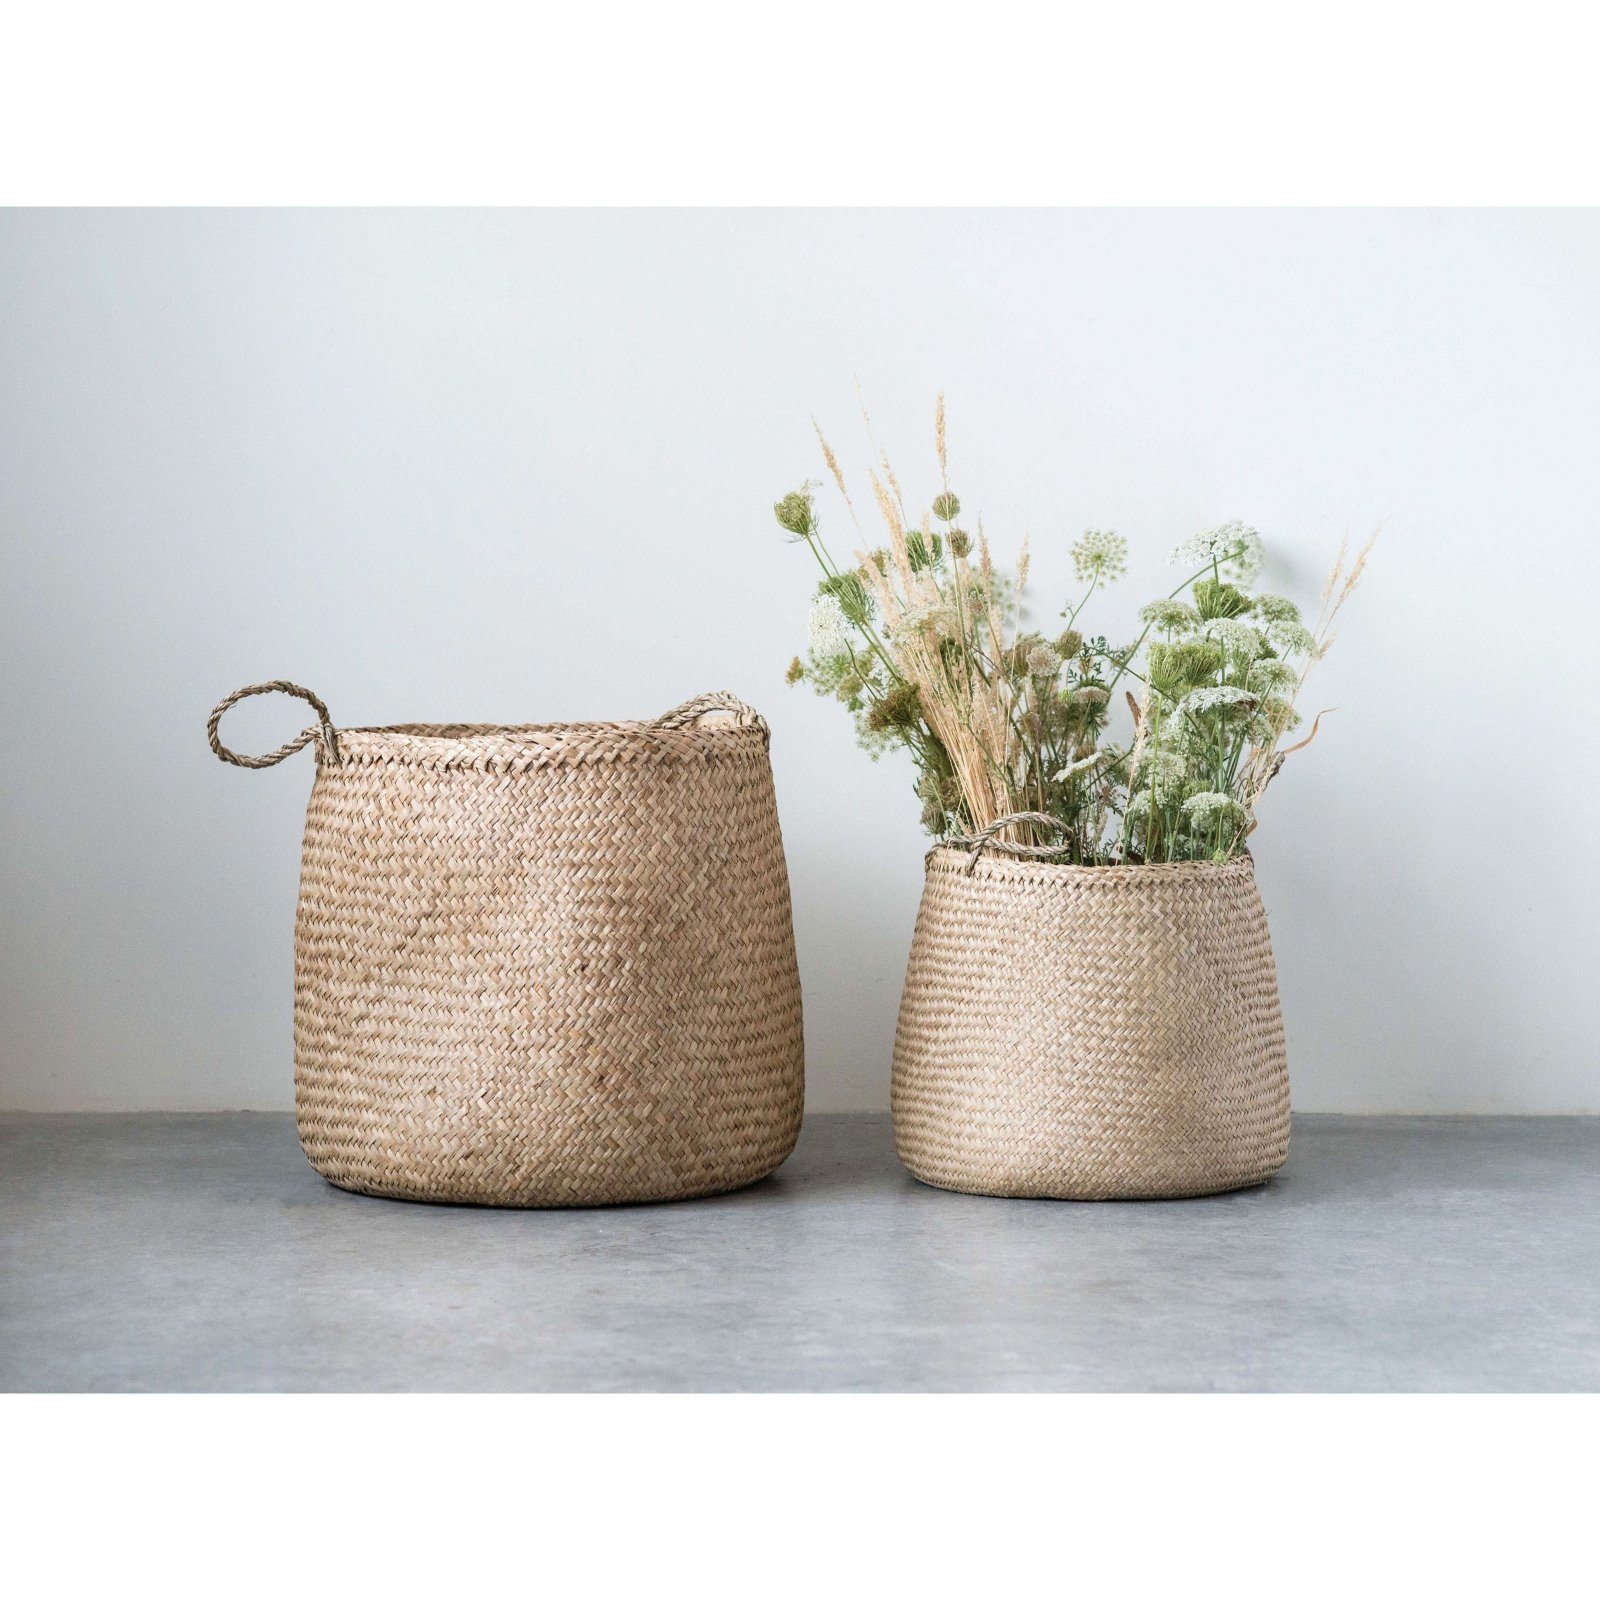 Freya Baskets, Set of 2 - Image 1